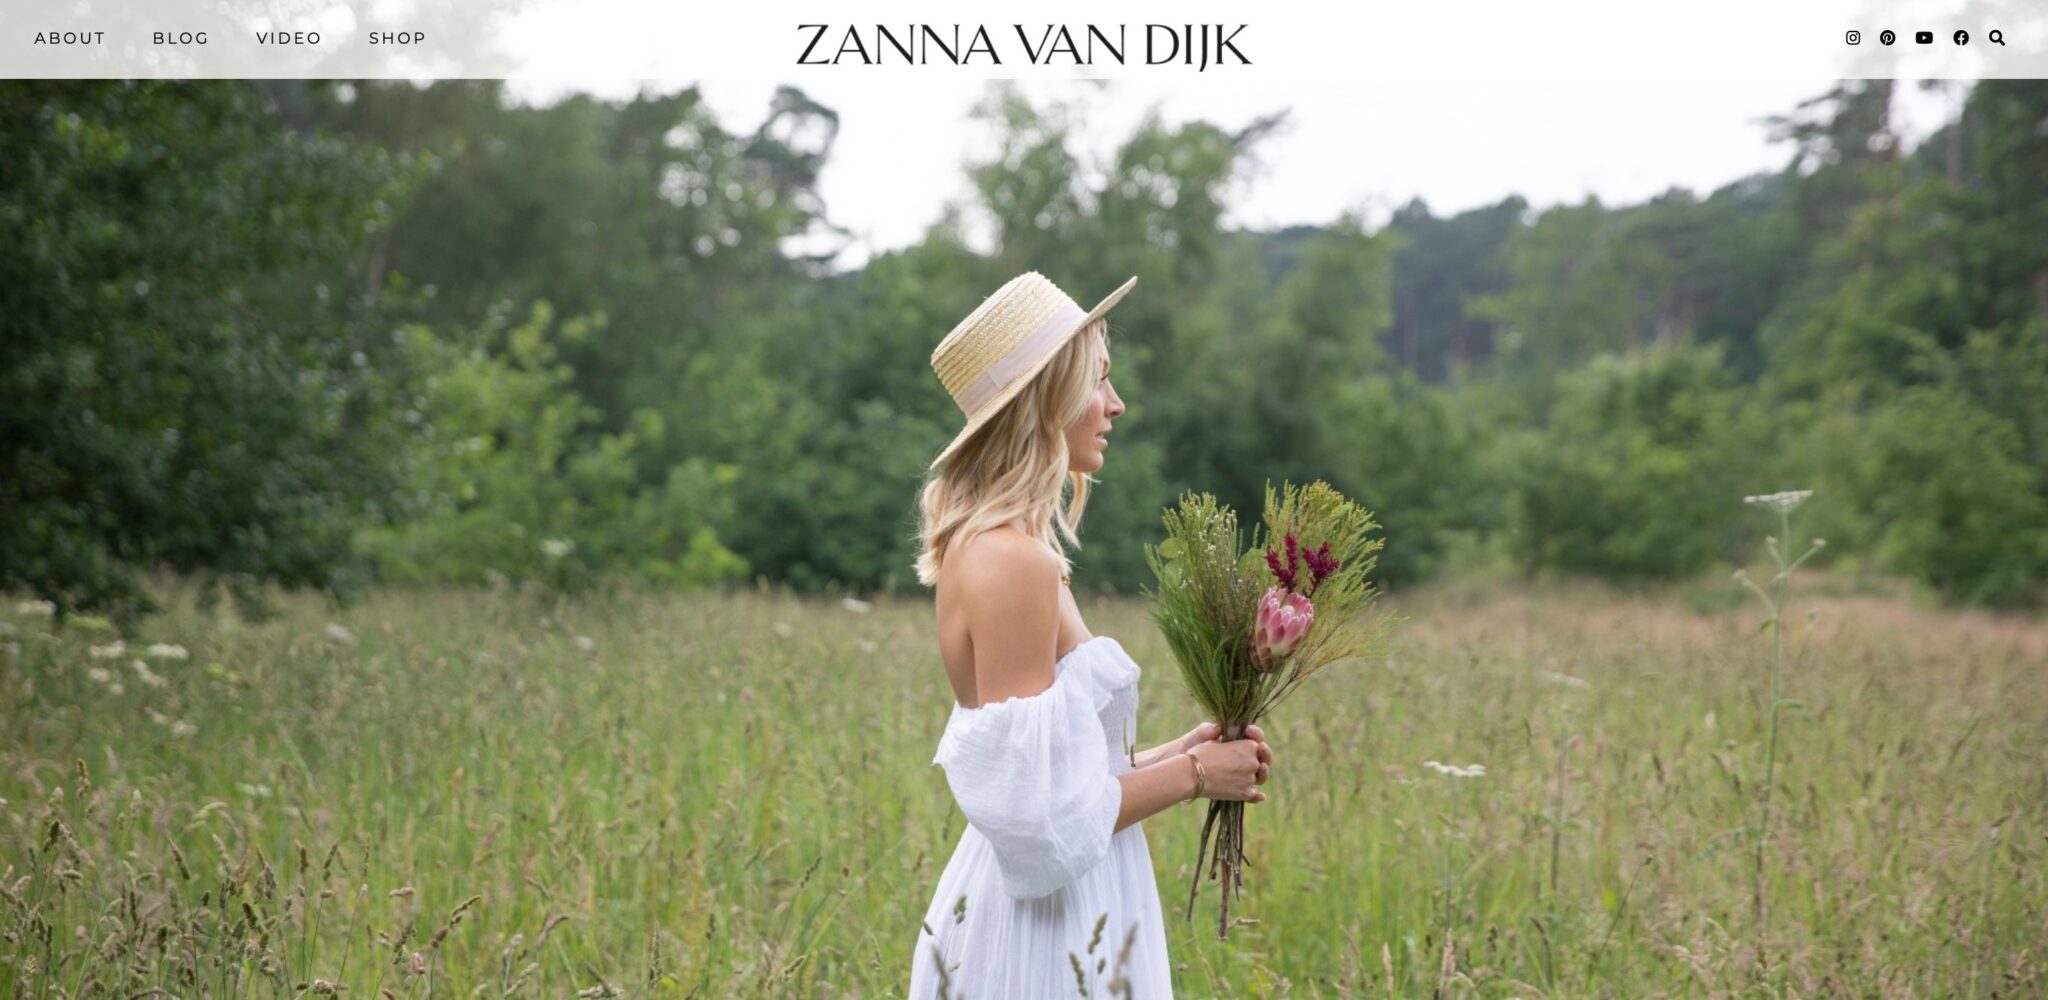 Zanna Van Dijk Personal Blog Home Page